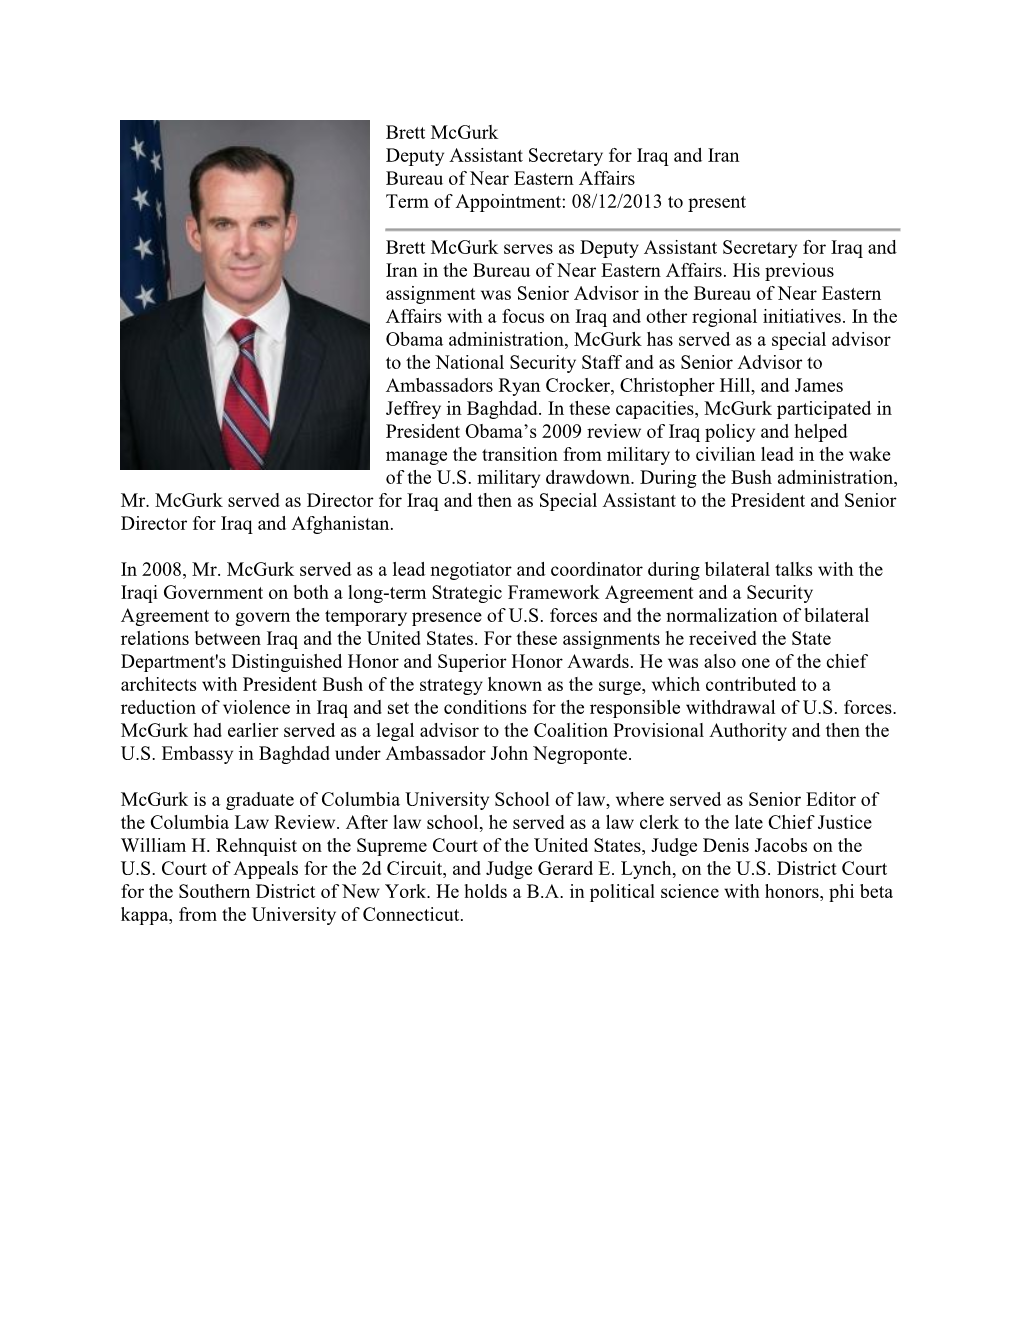 Brett Mcgurk Deputy Assistant Secretary for Iraq and Iran Bureau of Near Eastern Affairs Term of Appointment: 08/12/2013 to Present